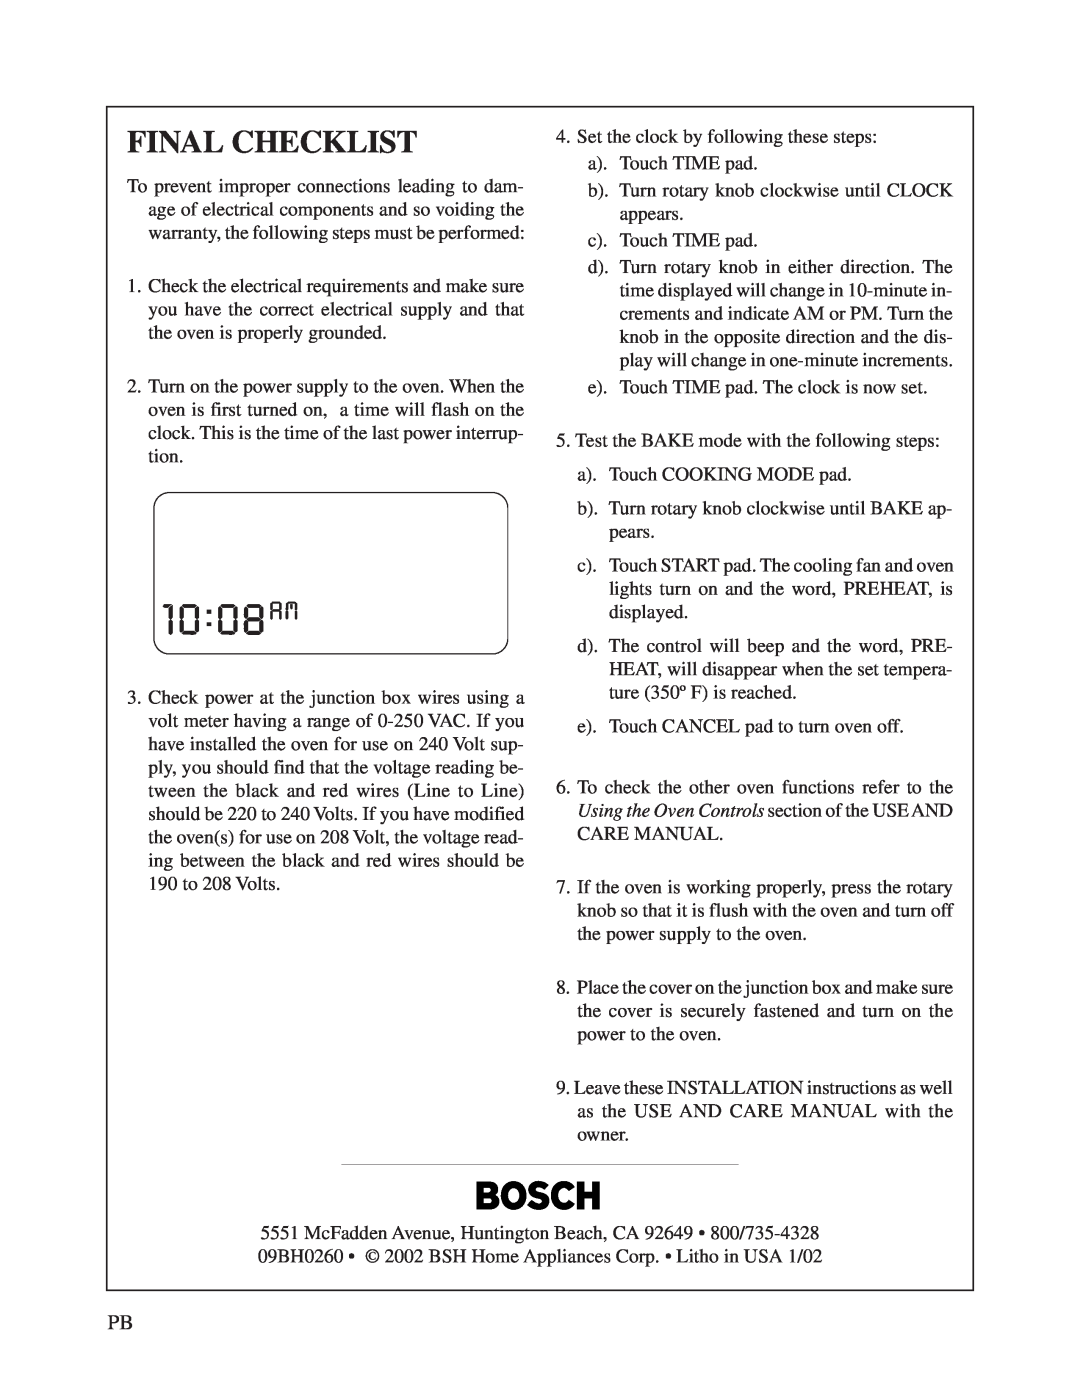 Bosch Appliances HBN 74 instruction manual Final Checklist, 10 08AM 